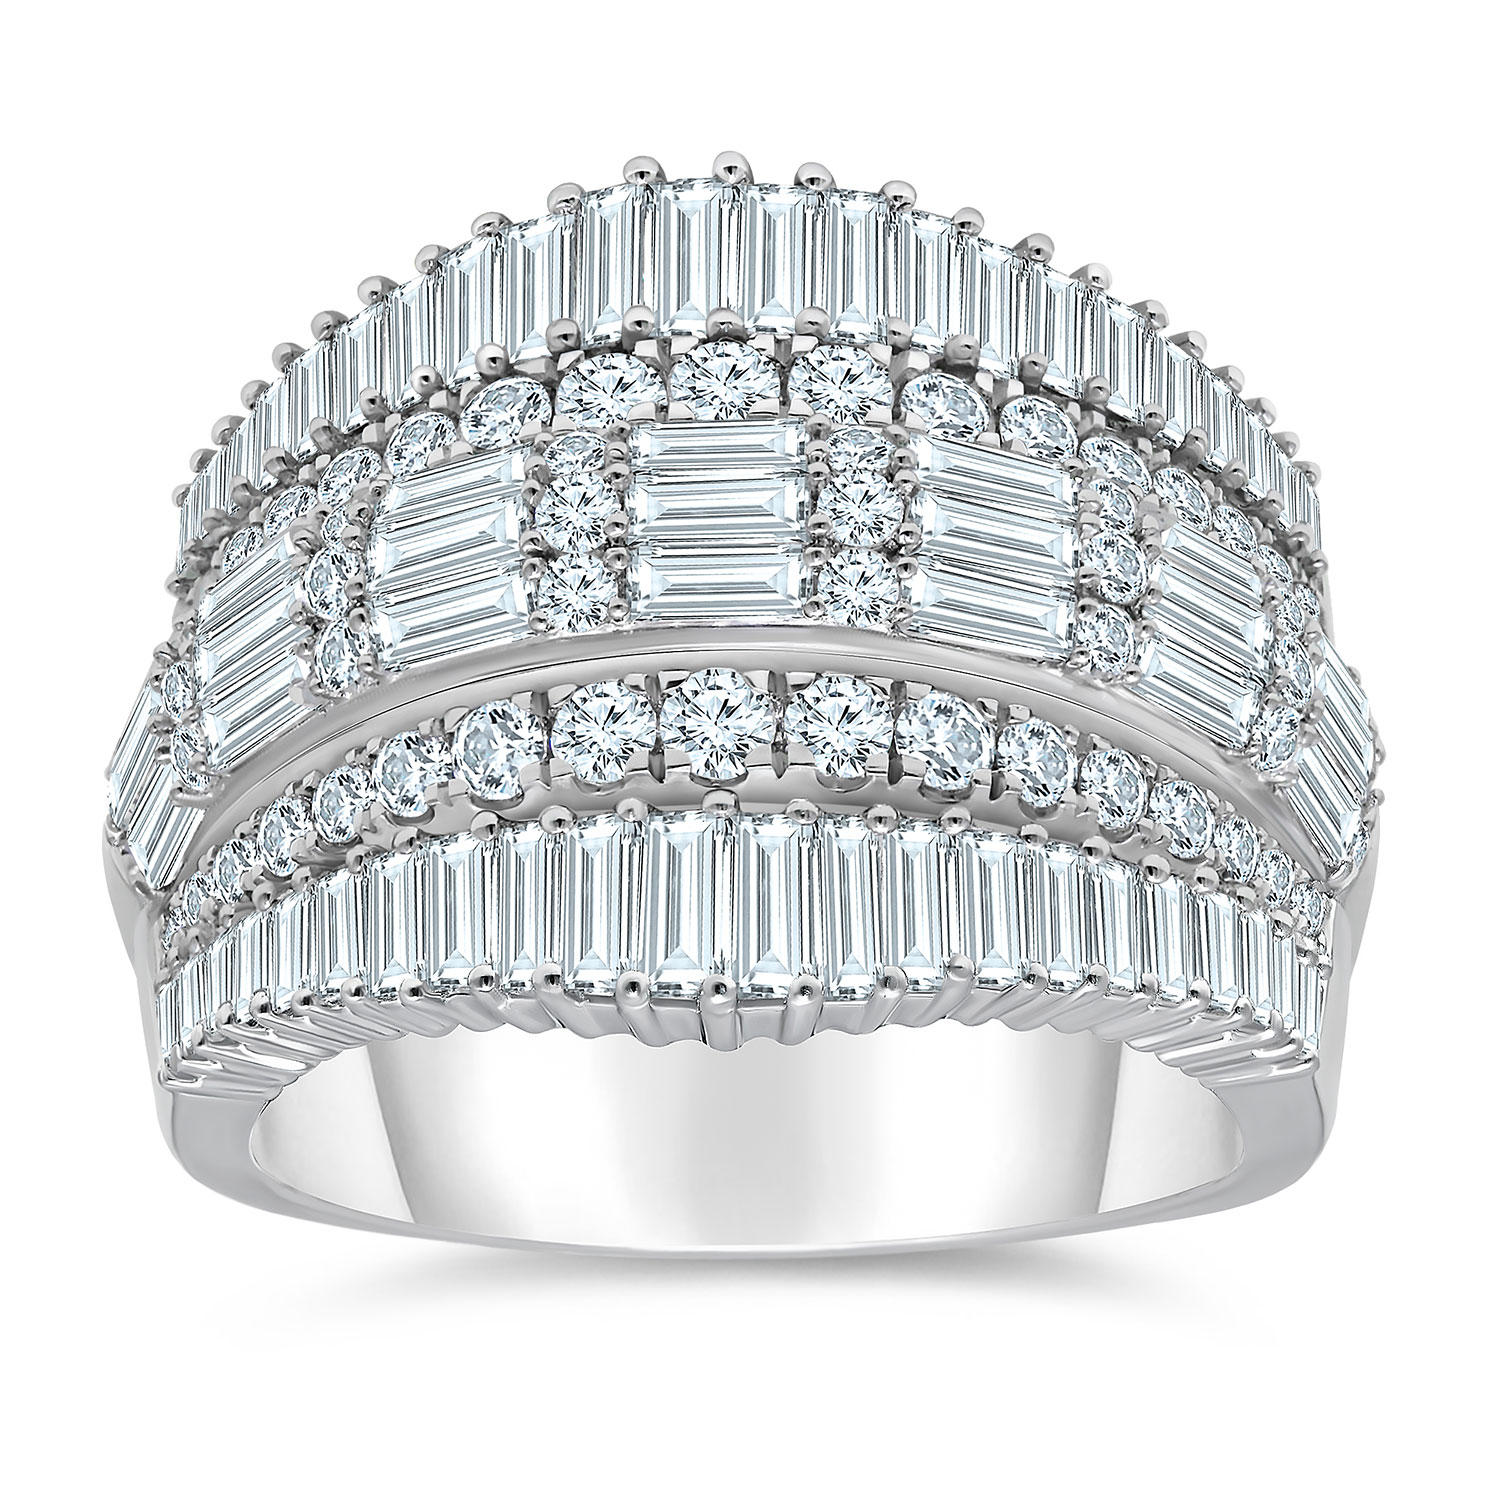 1.95 CT. T.W. Diamond Fashion Ring in 14K White Gold - 5